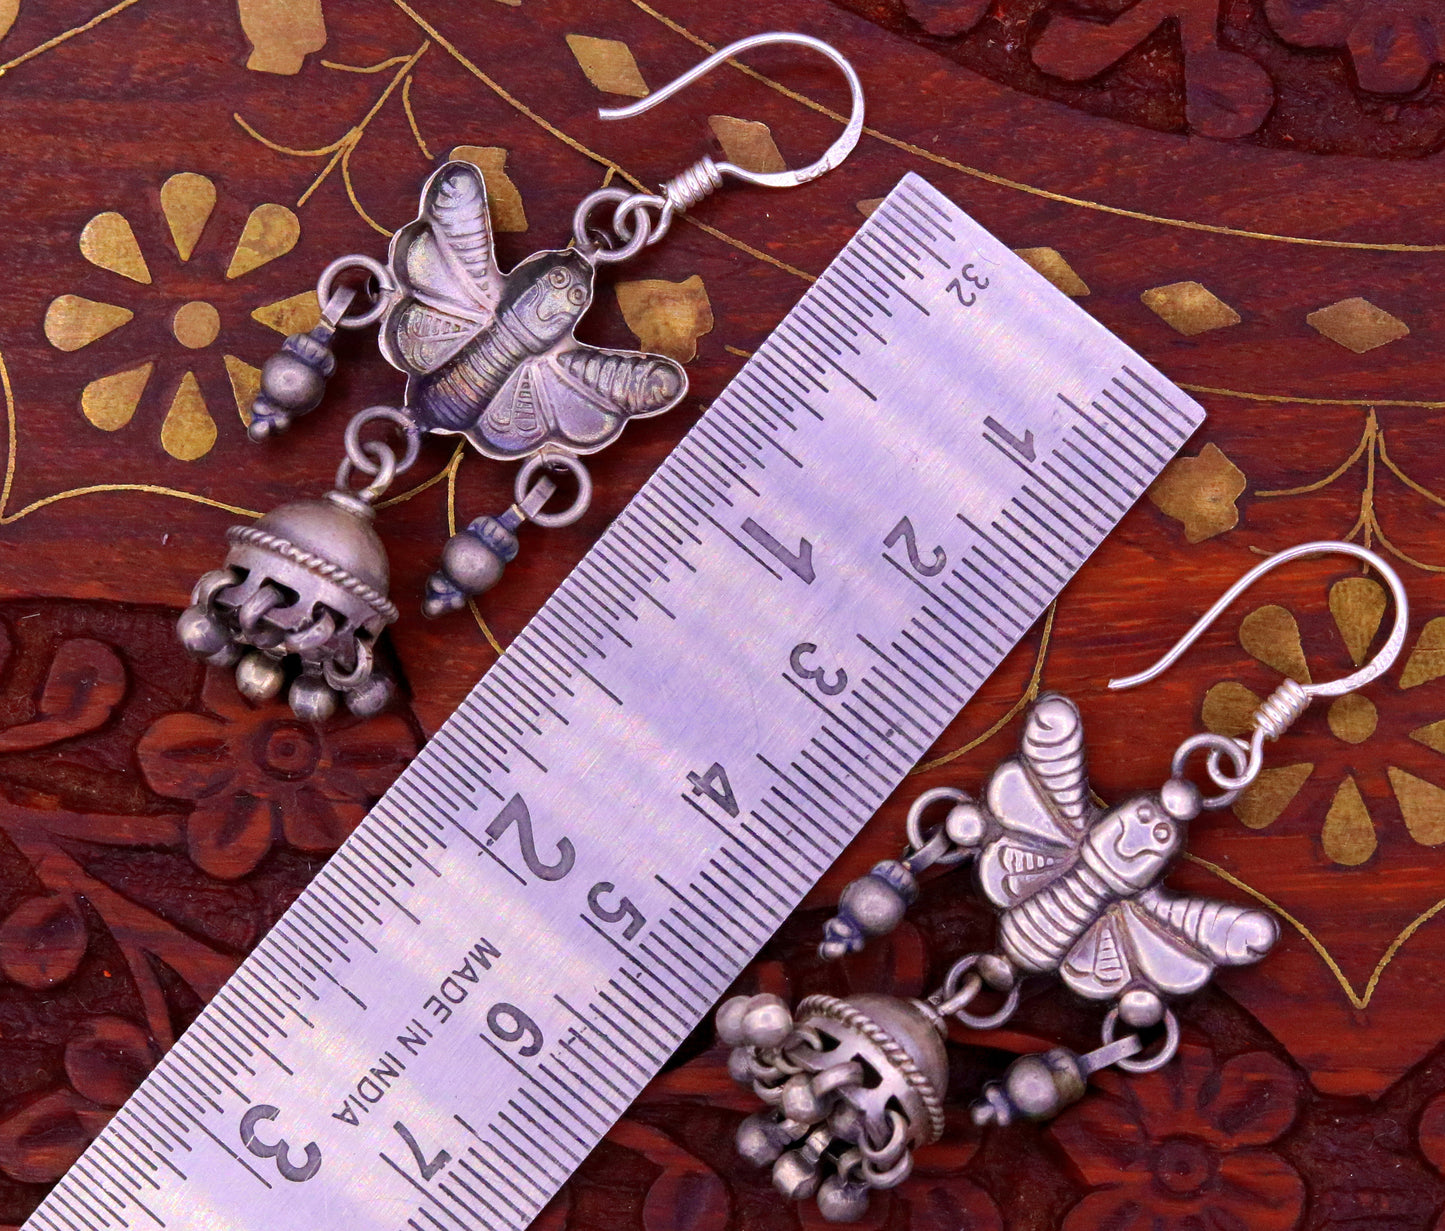 925 sterling silver handmade vintage style butterfly design hoops earring, stud earrings, jhumka with hanging bells tribal jewelry s637 - TRIBAL ORNAMENTS